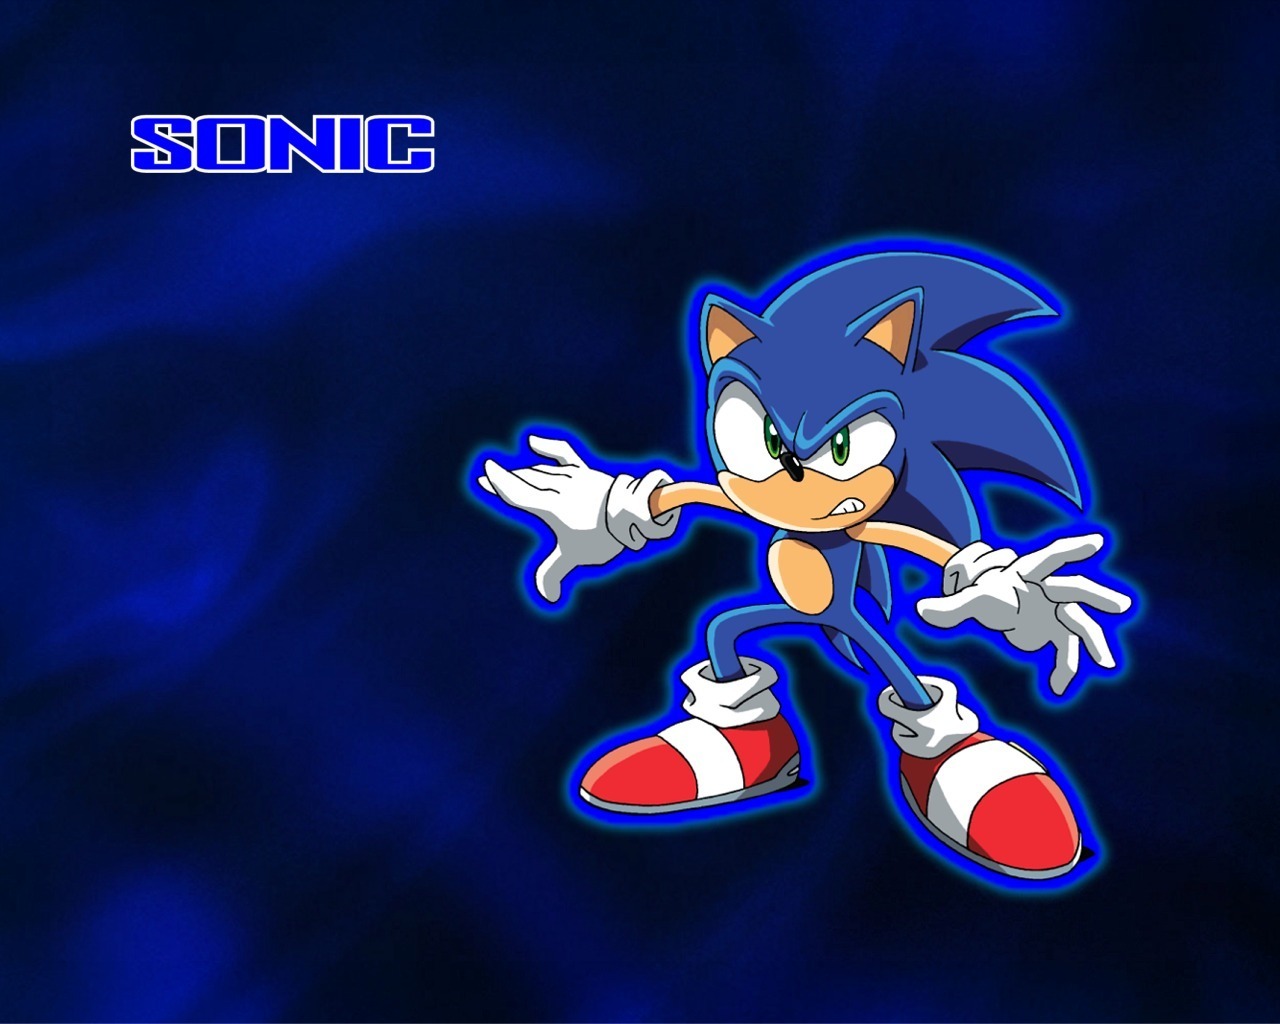 Hd Wallpapers Sonic The Hedgehog Anime 1680 X 1050 234 Kb Jpeg HD